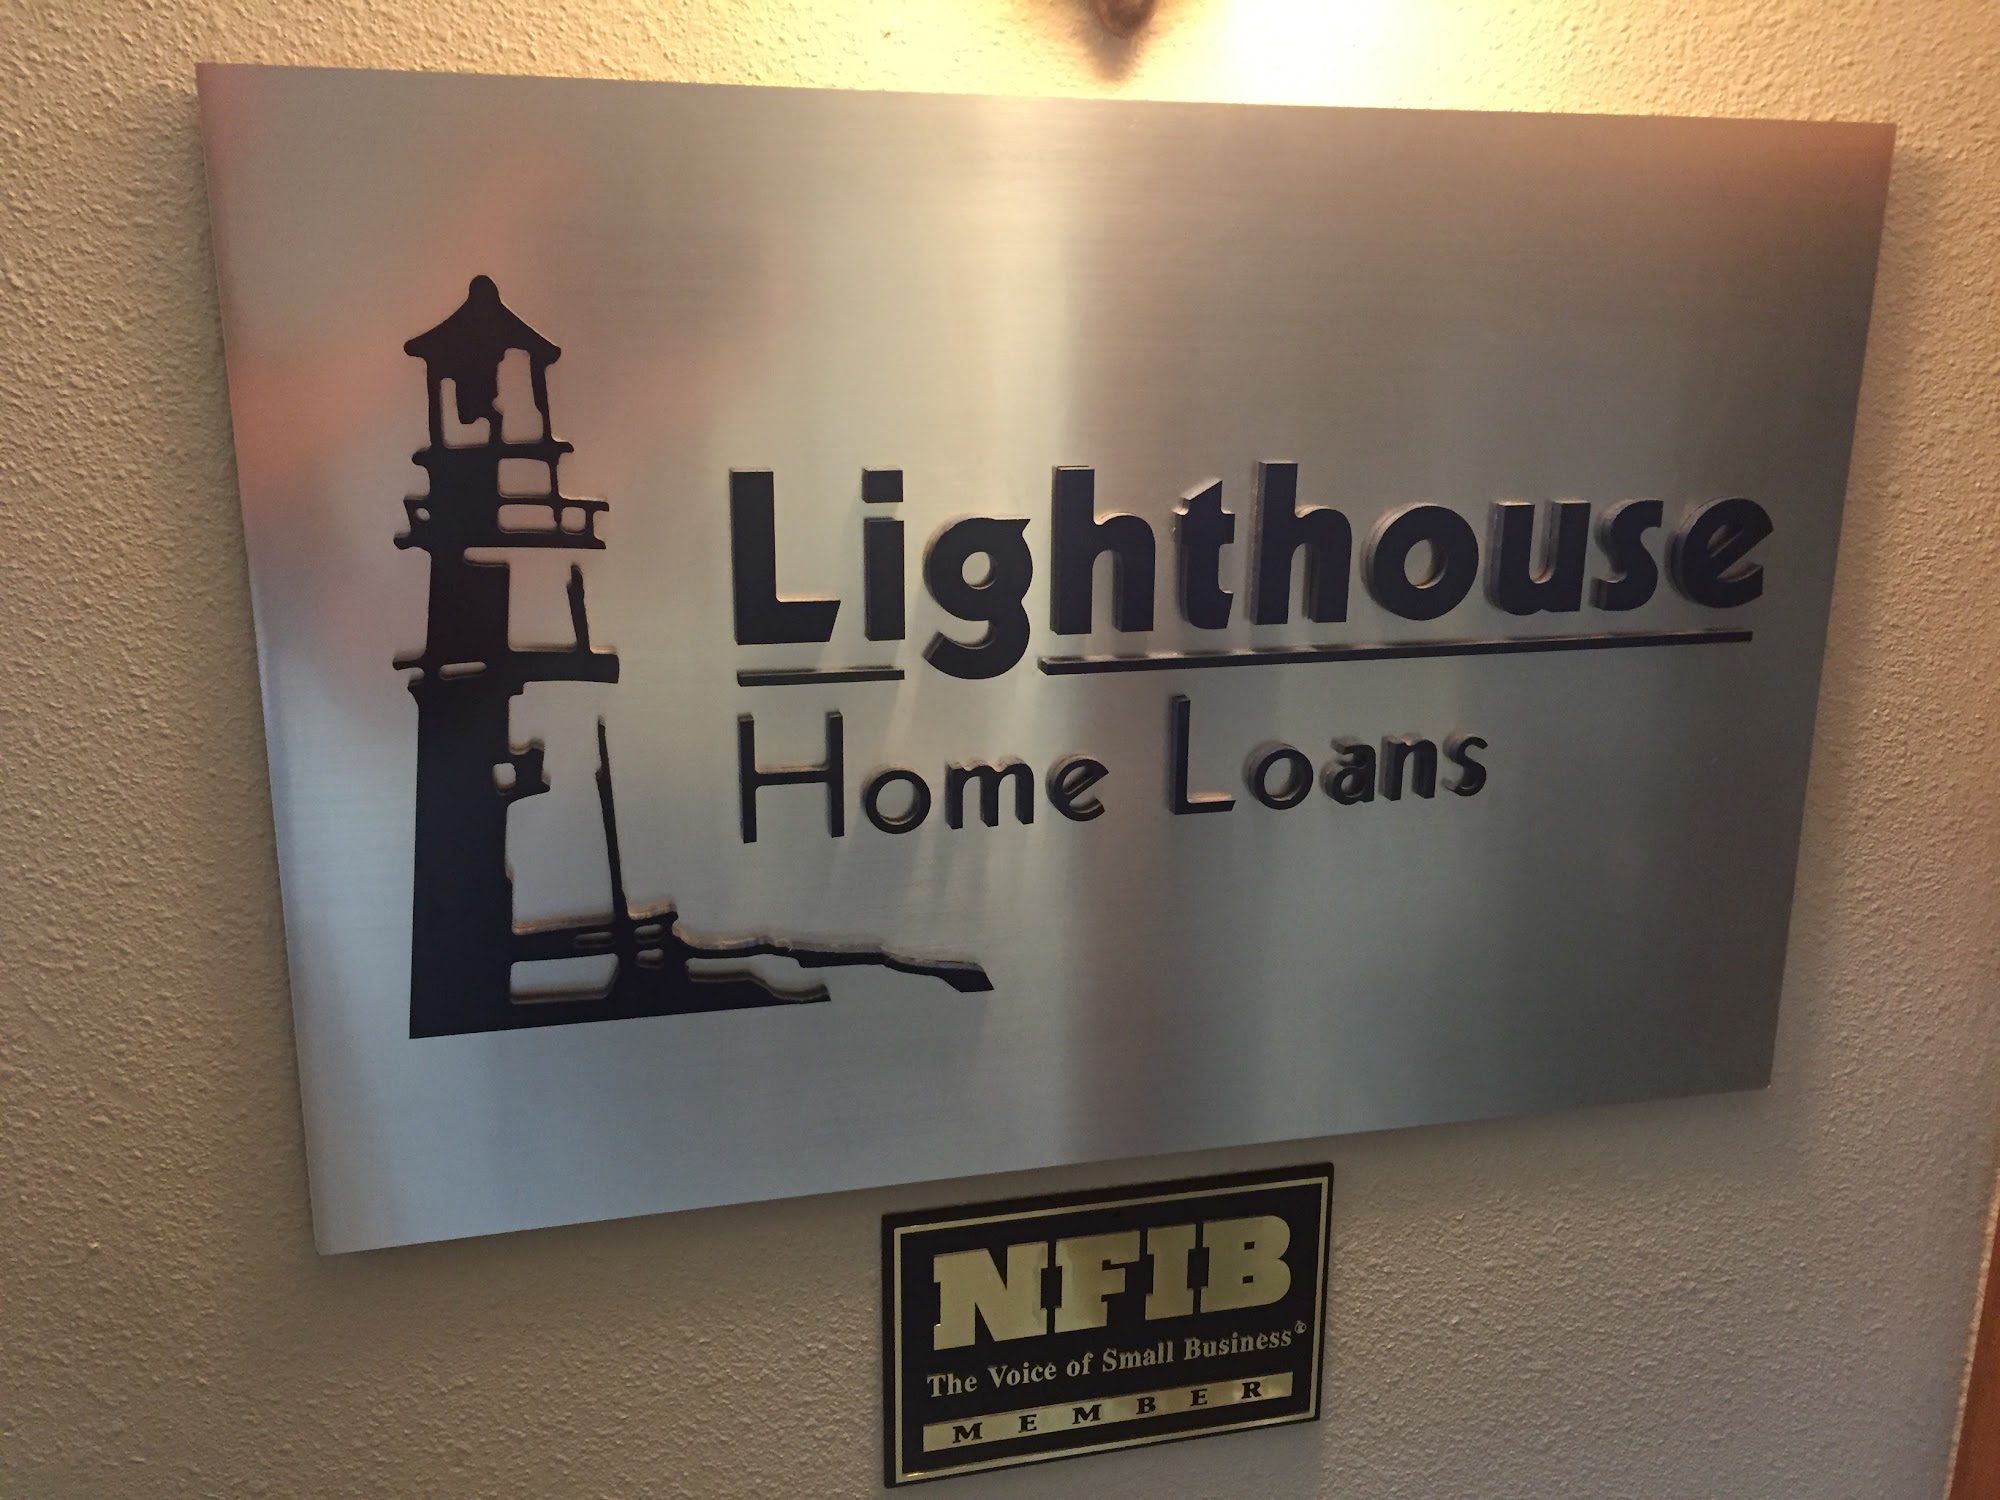 Phil Gerstner - Lighthouse Financial Enterprises, Inc.